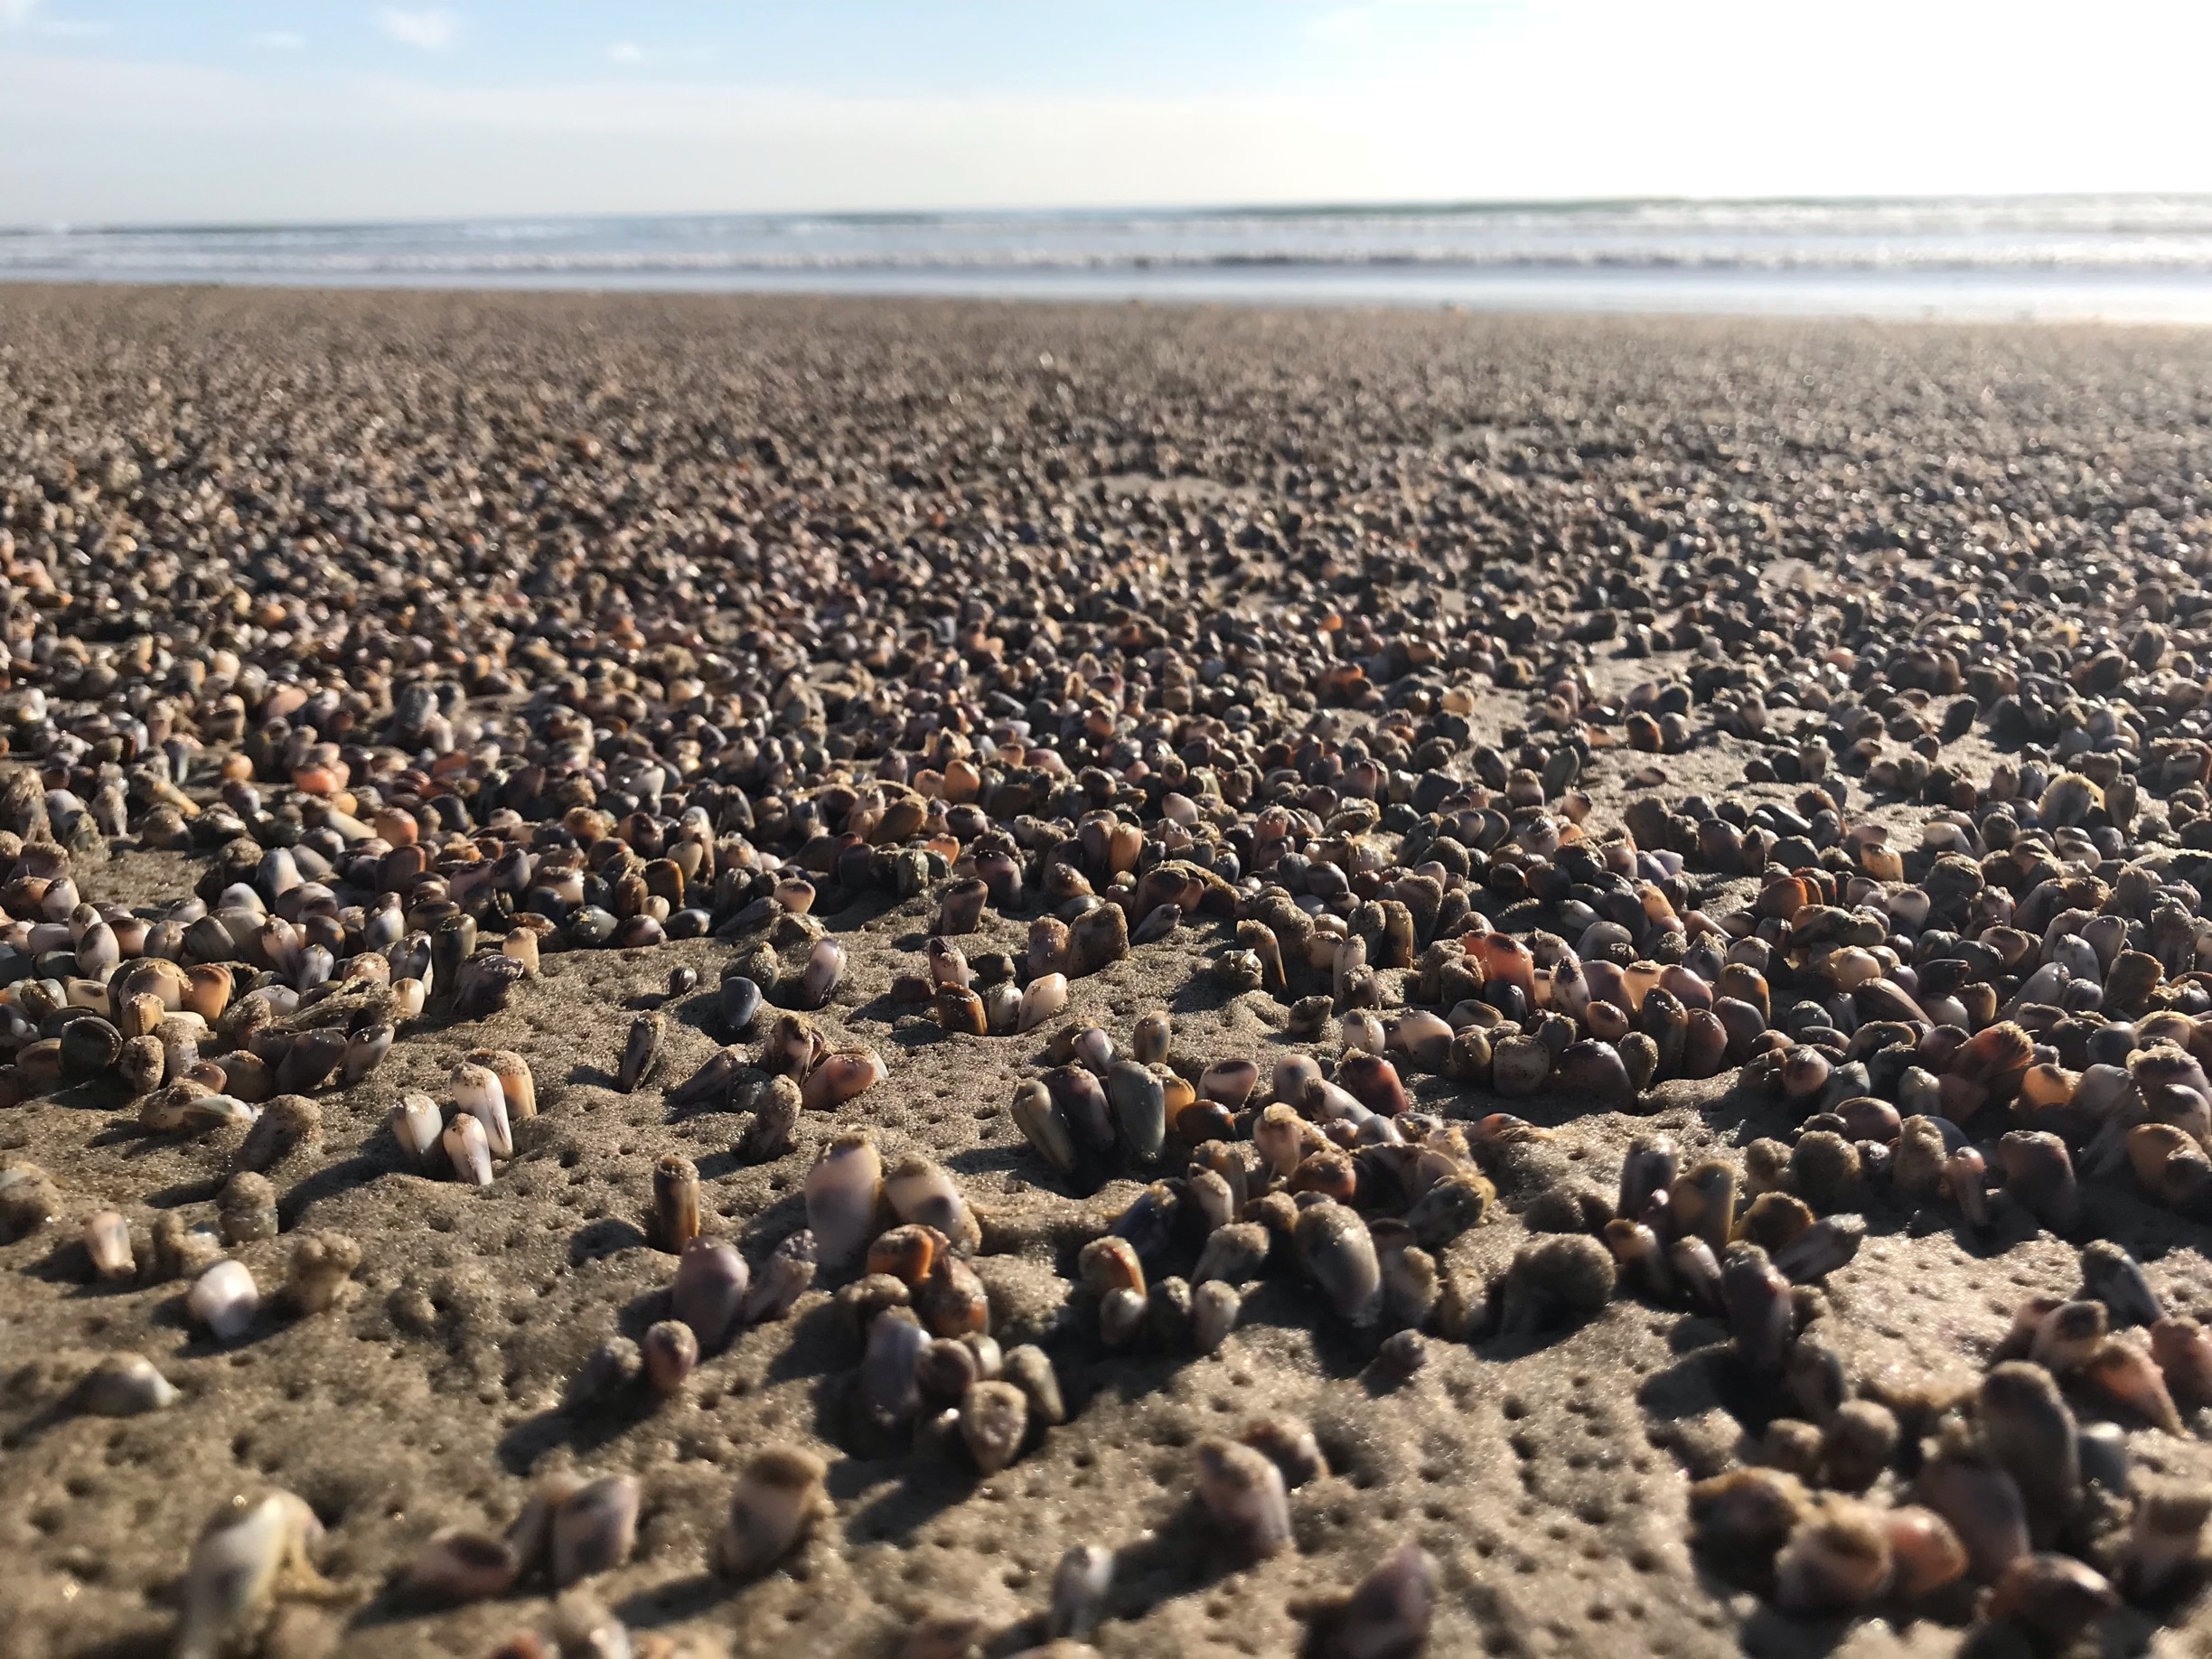 Exploring the #GreatOutdoors and noticed this part of Malibu, to be exact Zuma beach... shells...so pretty!